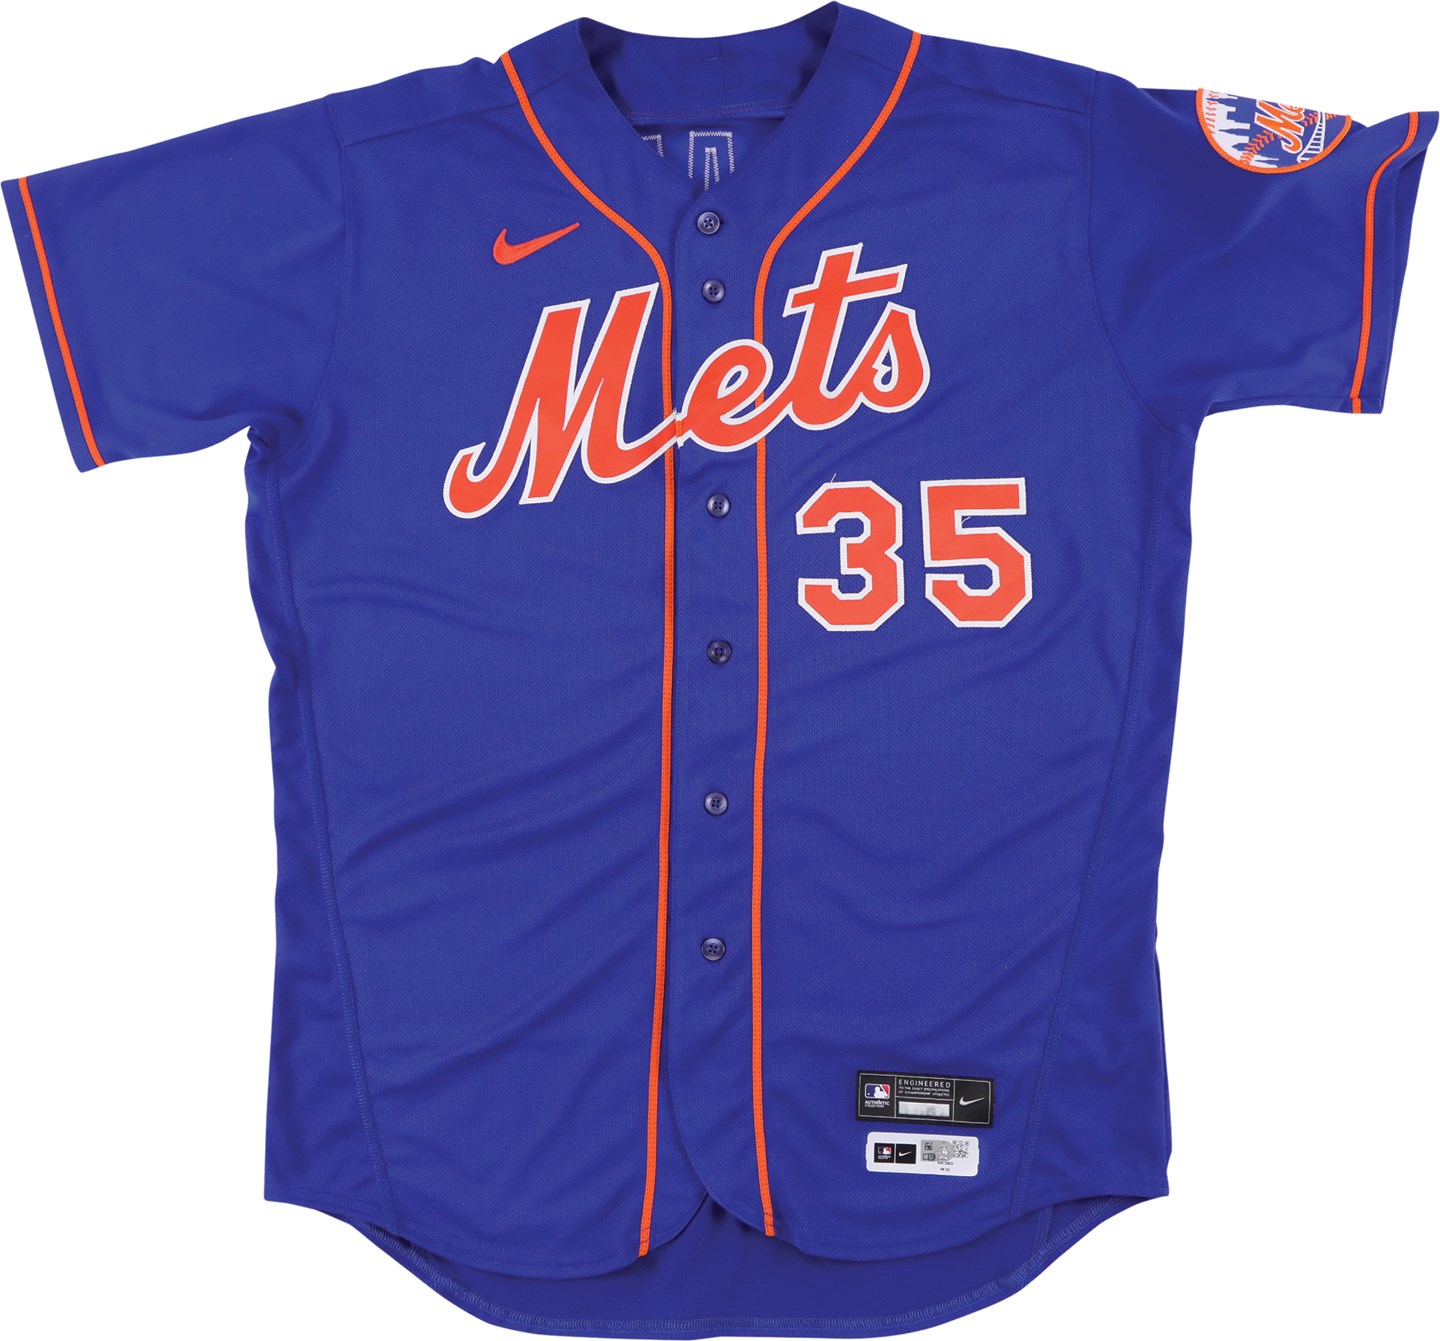 - March 15, 2023 Justin Verlander New York Mets Game Worn Jersey (Photo-Matched)